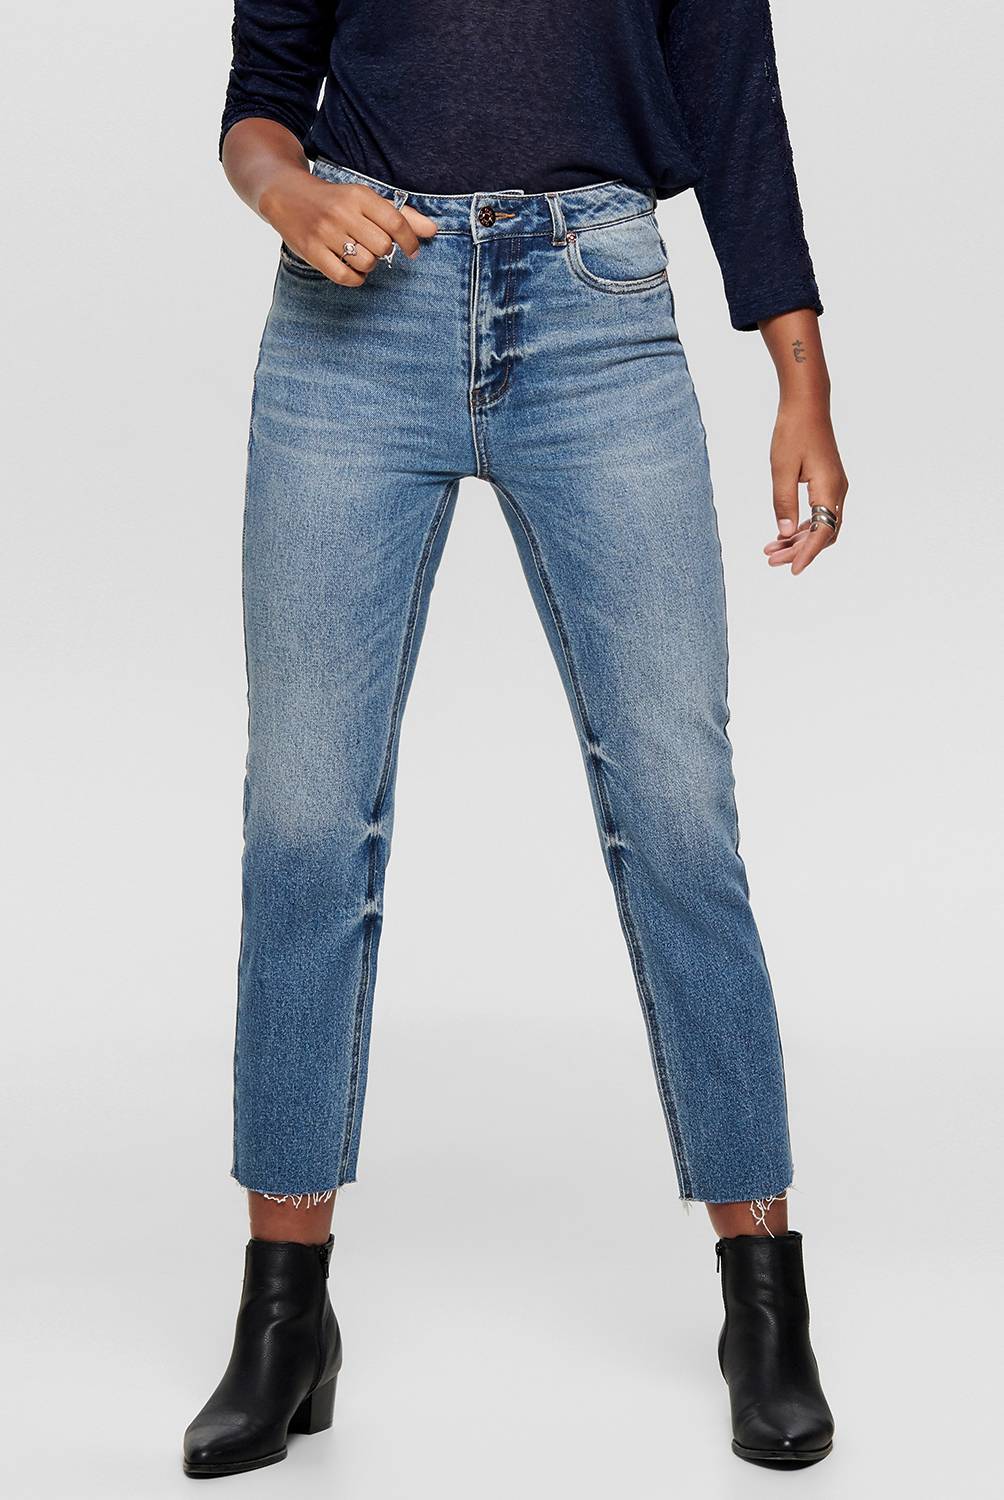 ONLY - Jeans de Algodón Mujer